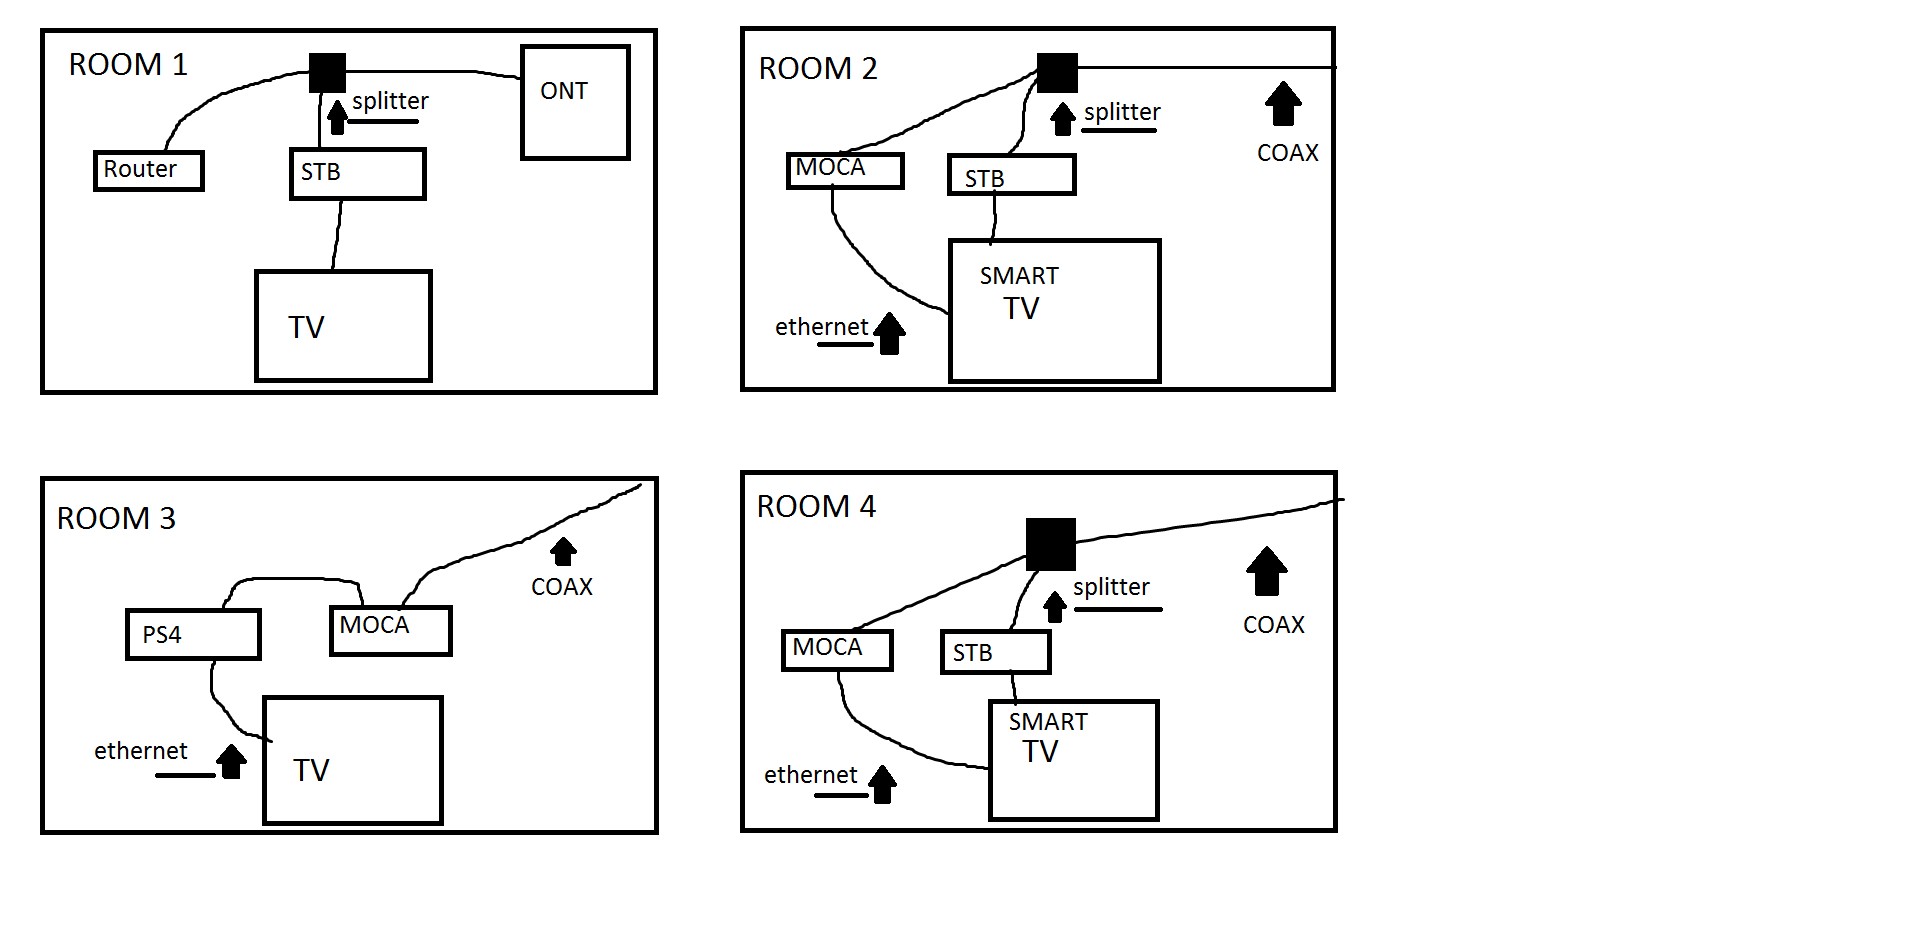 79 Fios Home Network Design Diycreative Diy Network Fios Home Part 123 Wiring Diagram Electrical